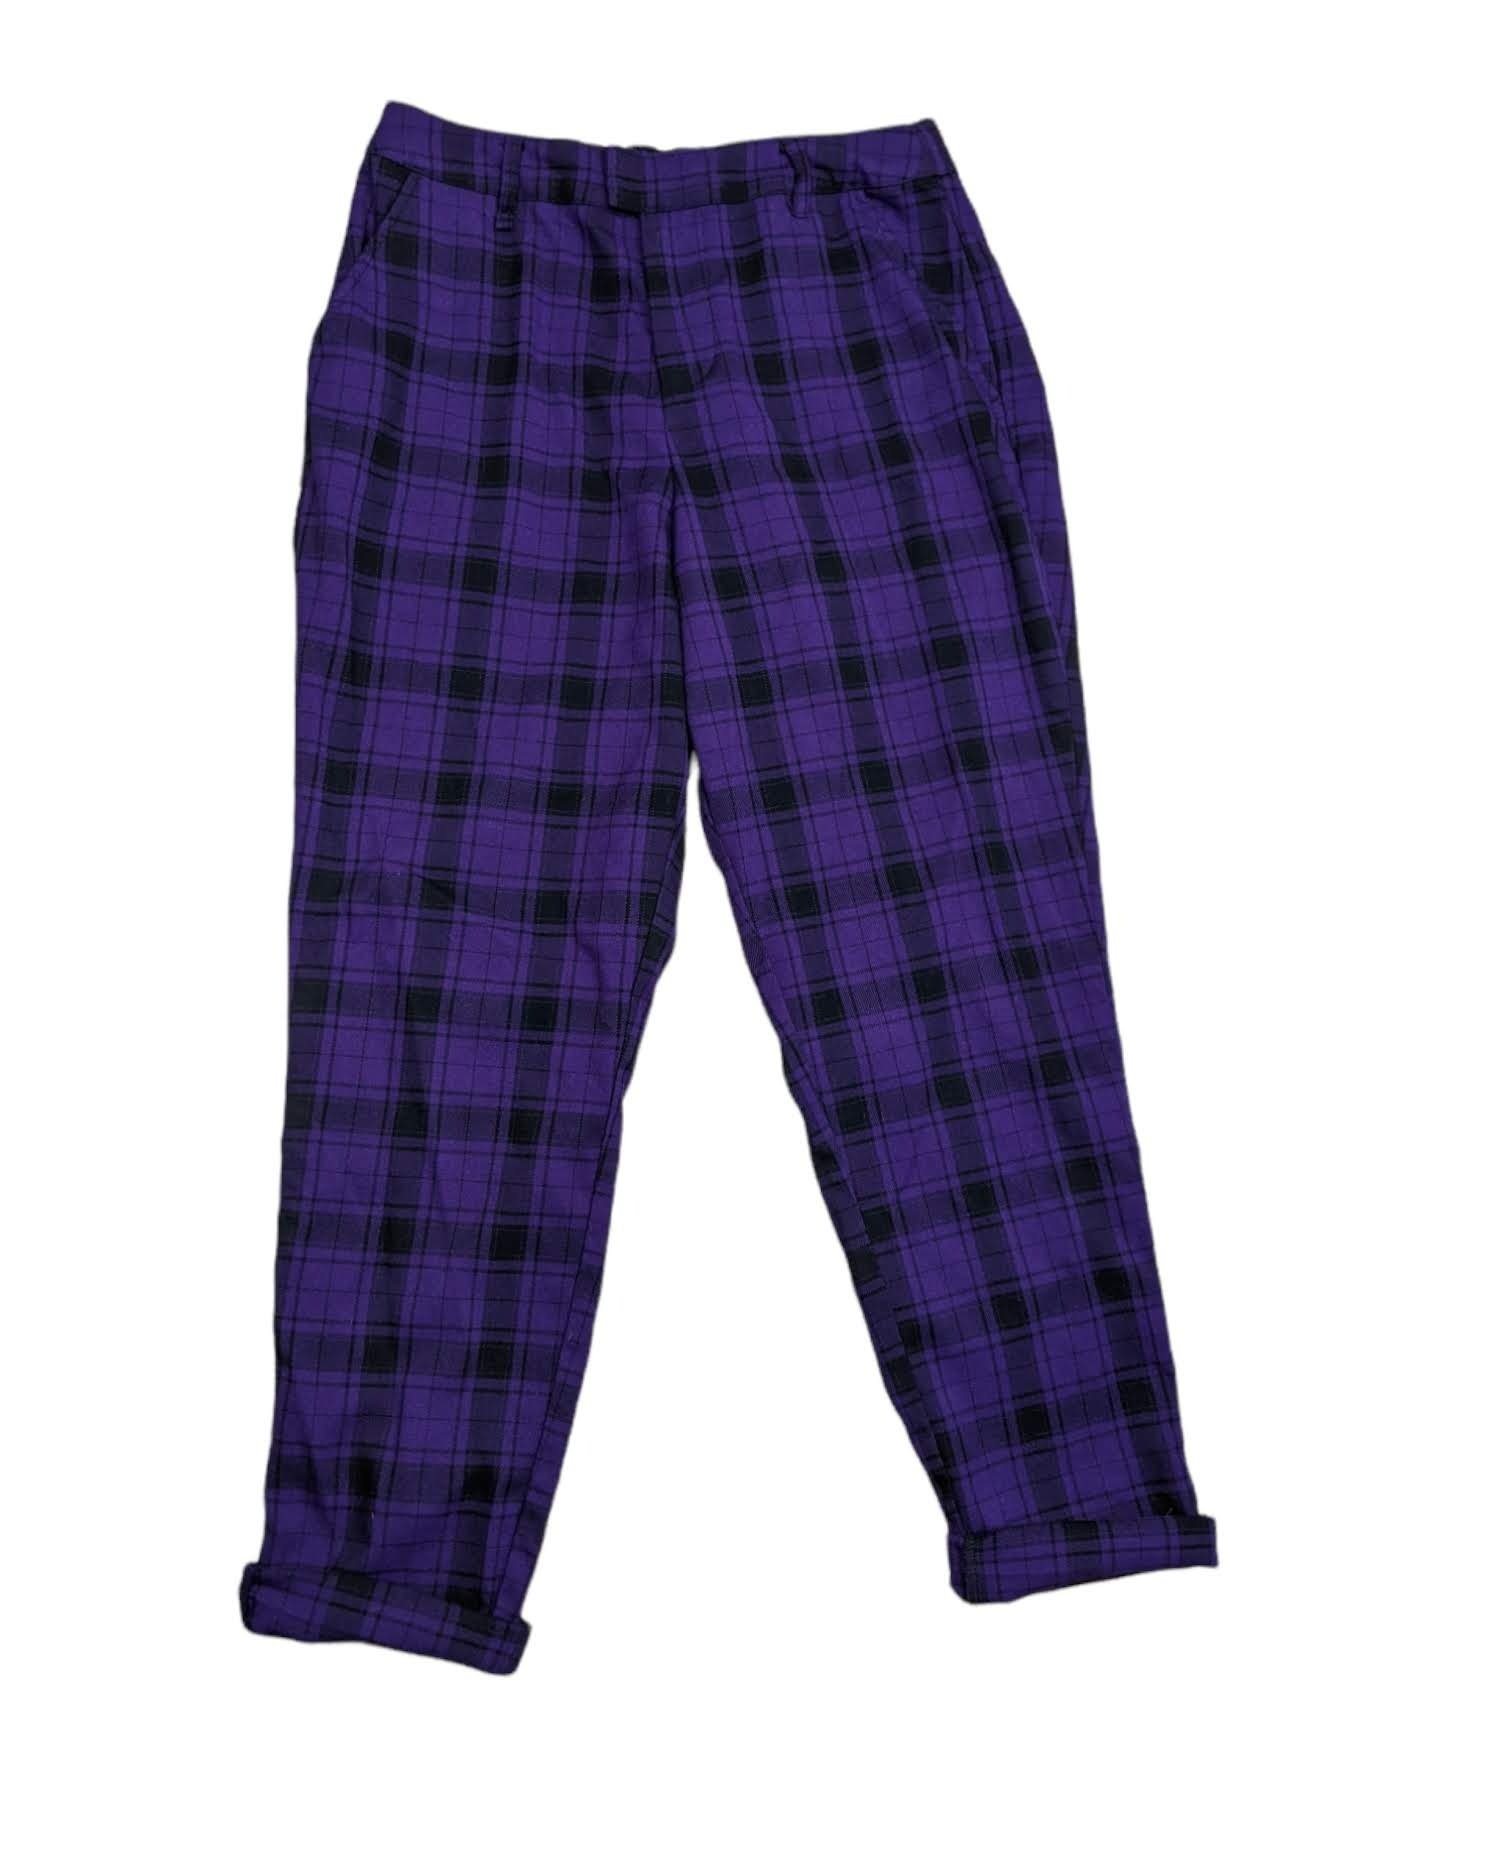 Hot Topic Purple & Black Tartan Plaid Pants (M) — Savill's Secondhand